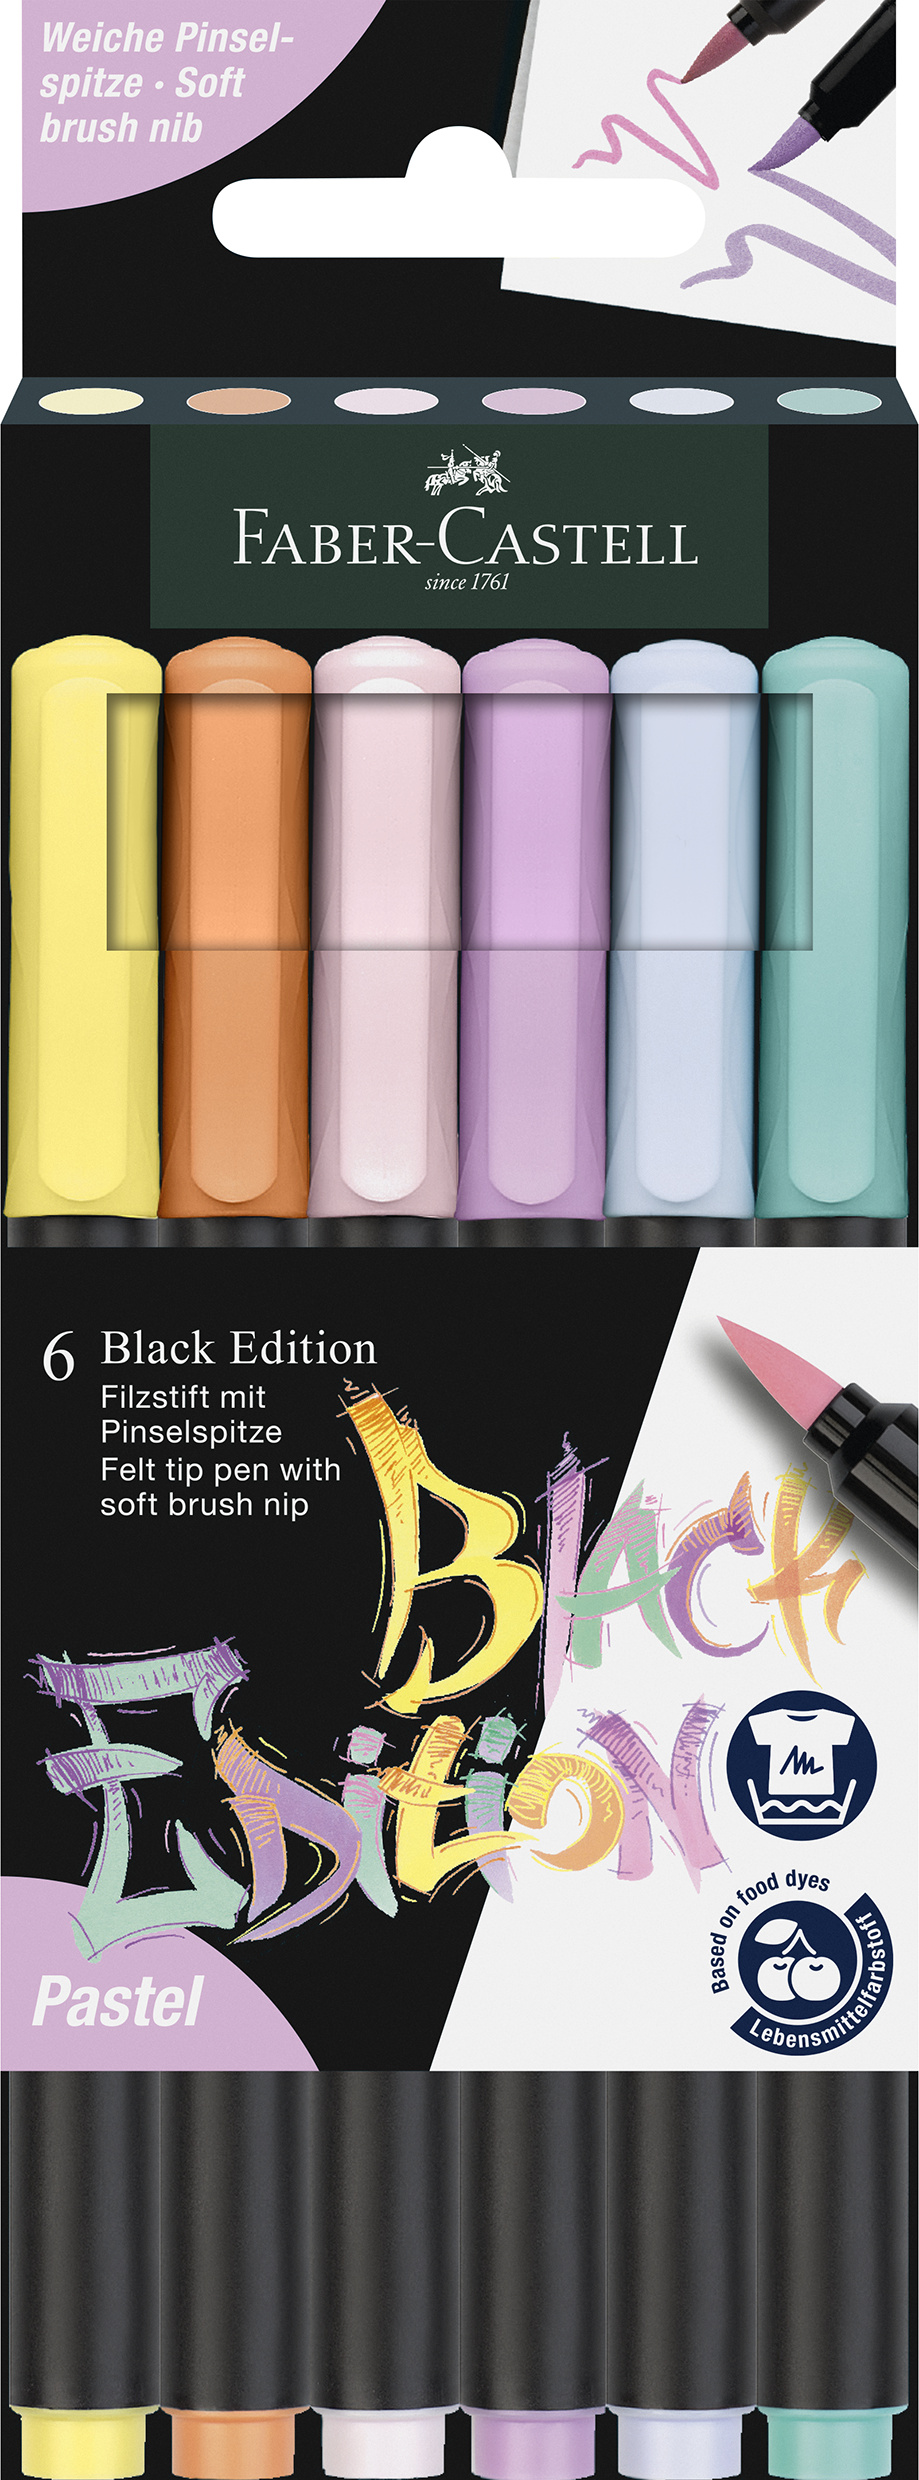 Faber-Castell_Brush pen Black Edition pastel, cardboard box of 6_EUR 5,50 (1)